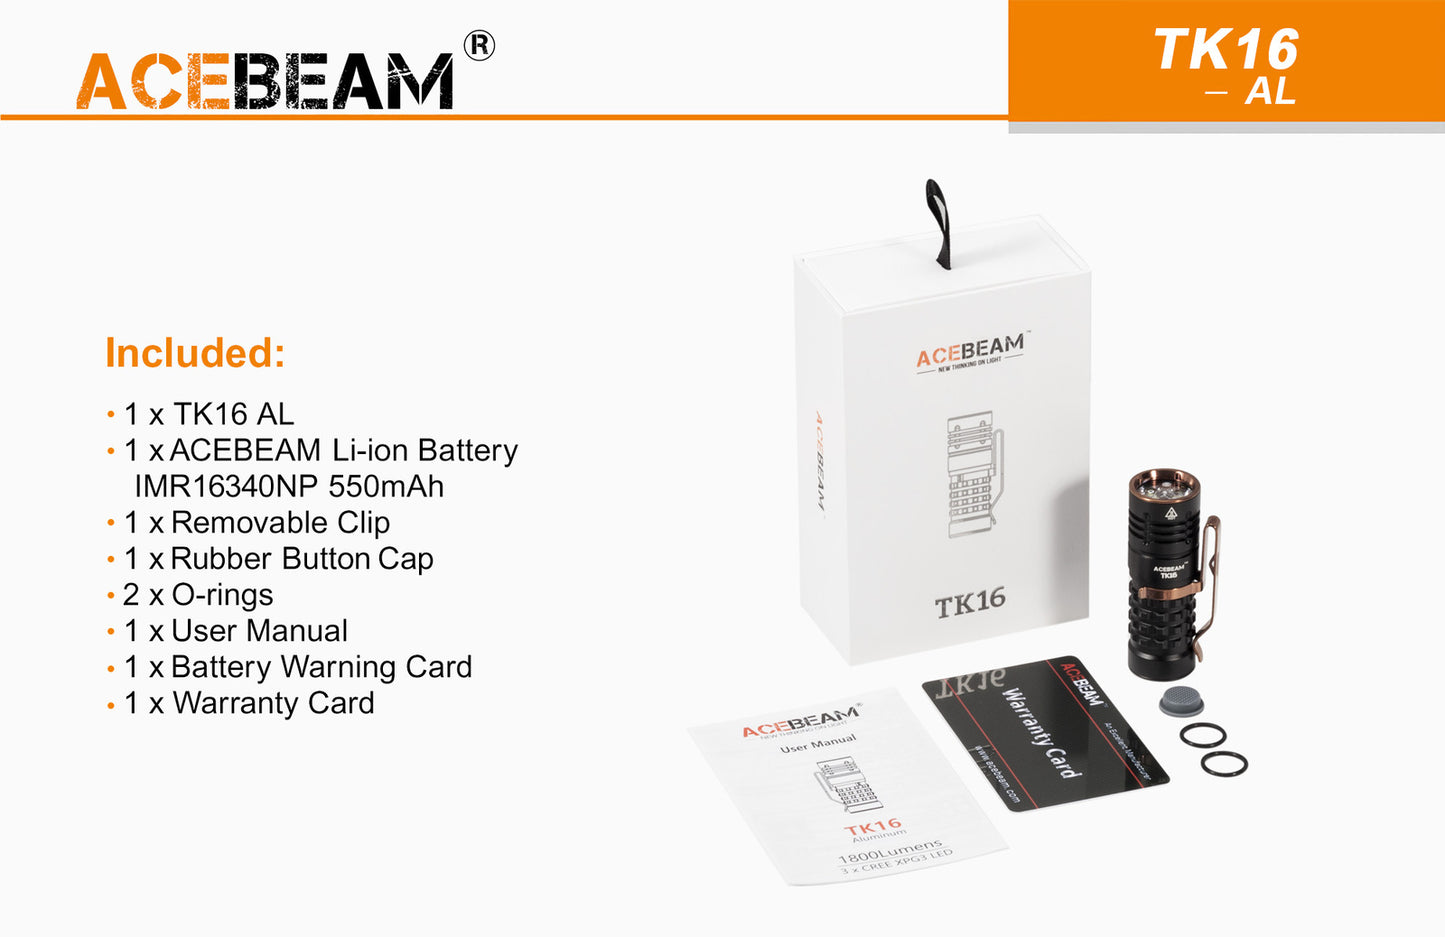 Acebeam Acebeam Cree Led Edc Compact Flashlight - 1800 Lumens Aluminum #tk16-Al White Smoke